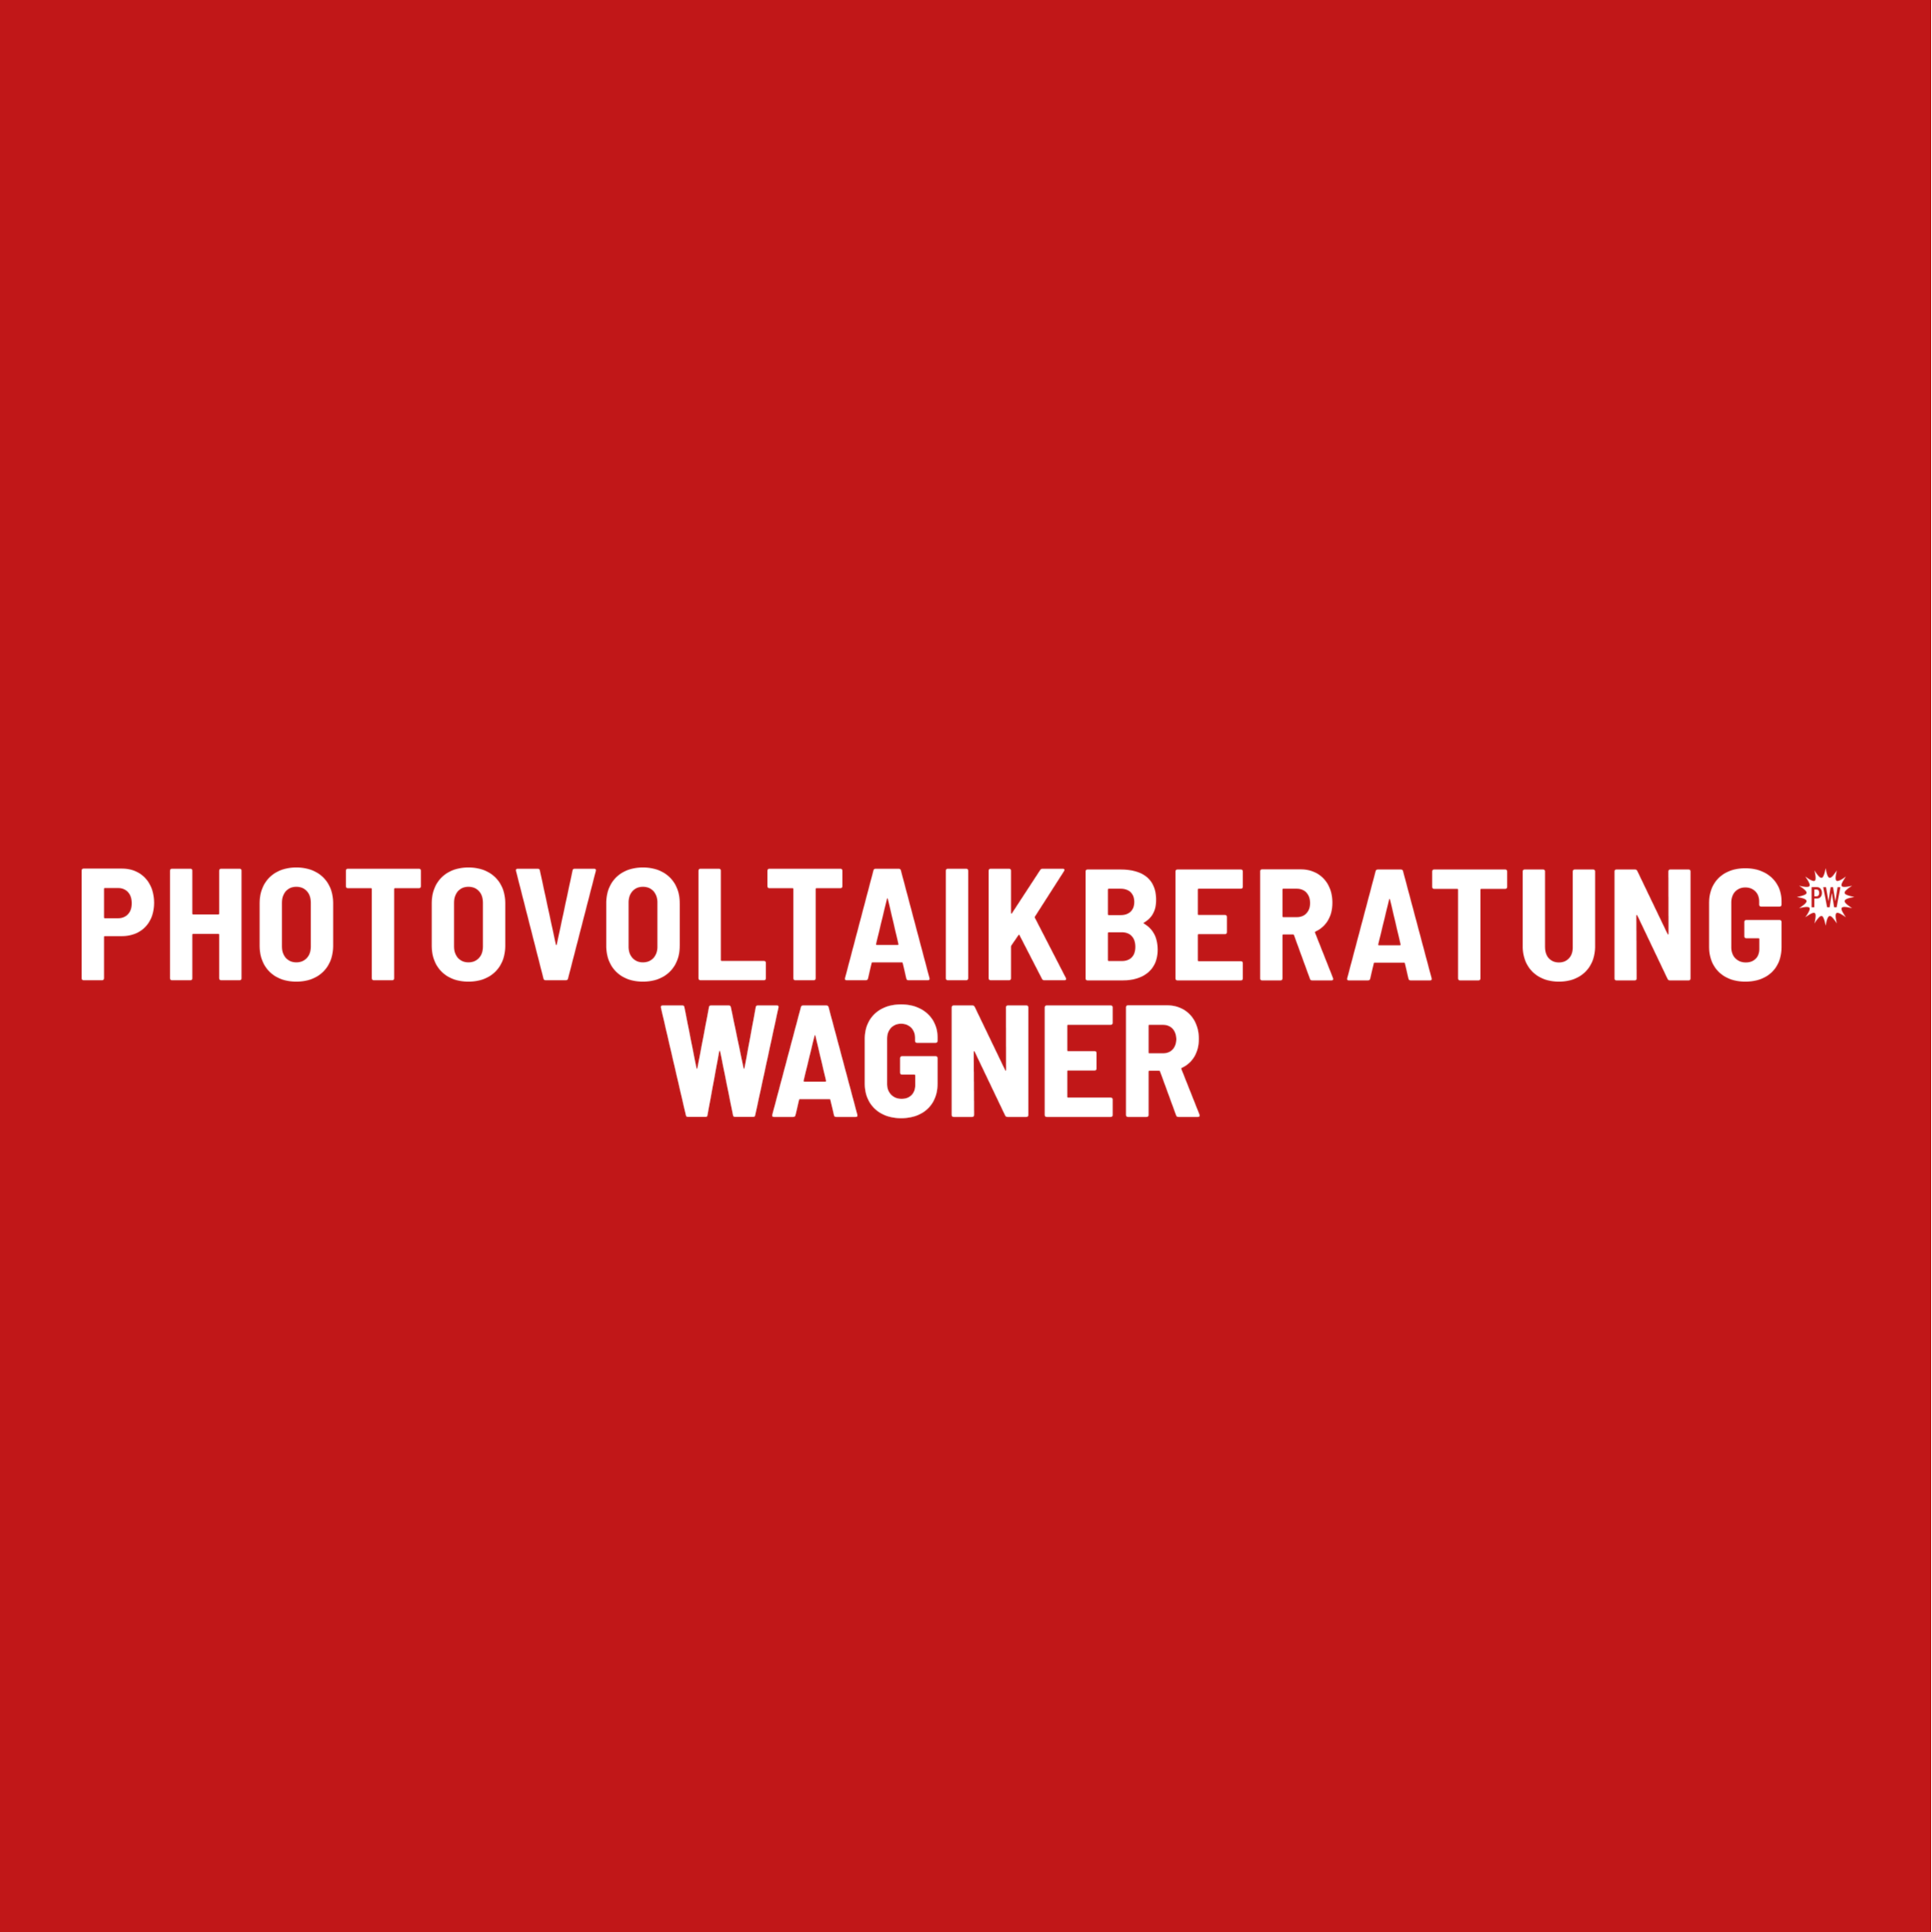 Photovoltaikanlagen Wagner Logo